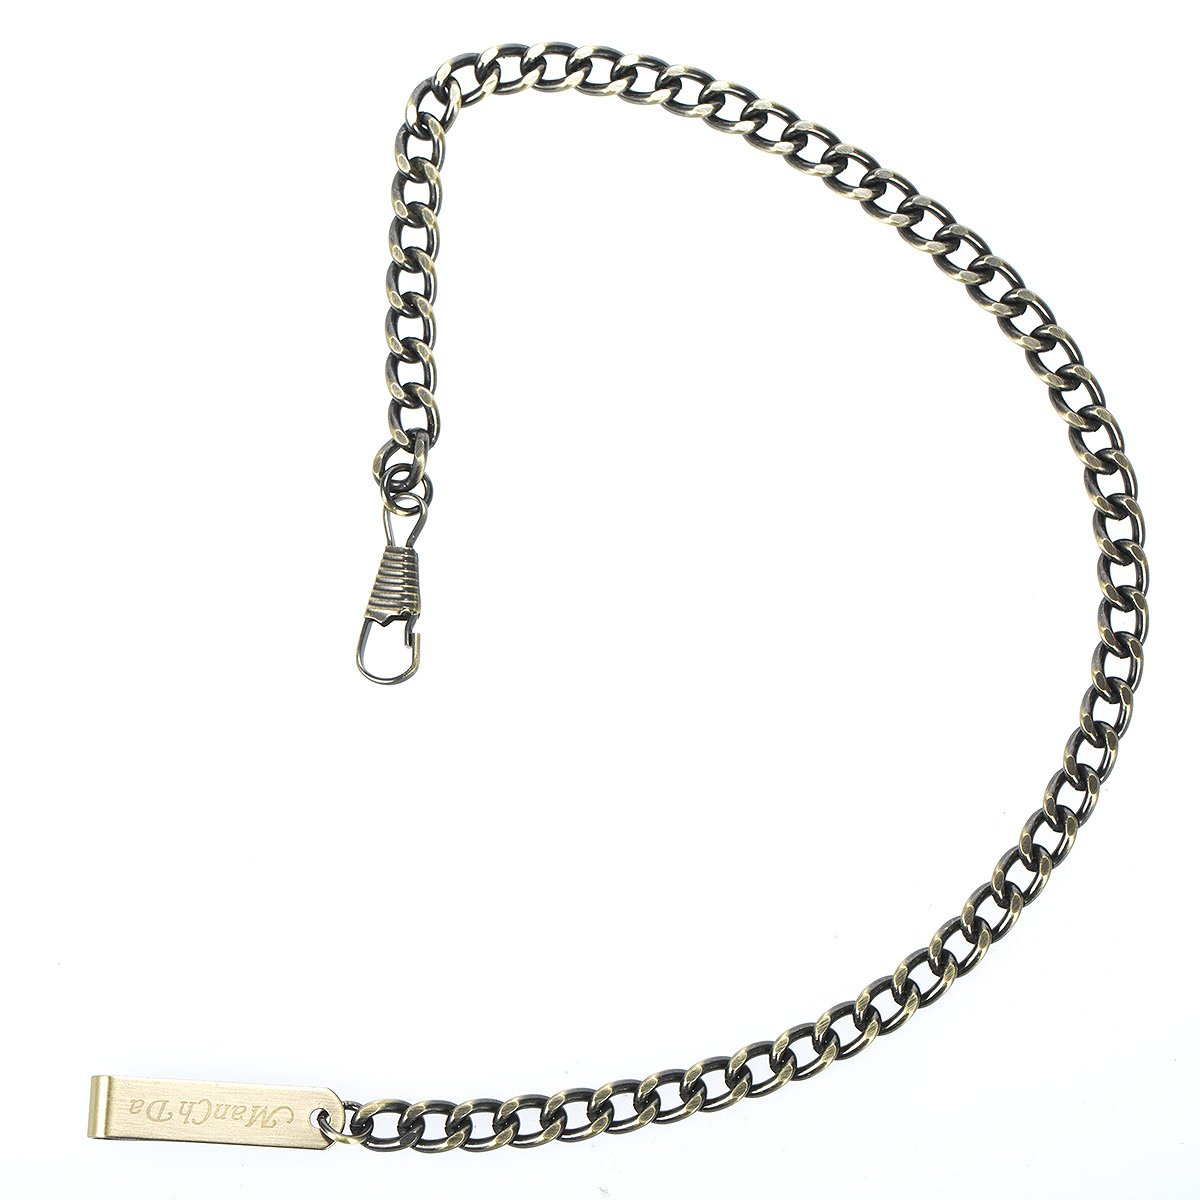 ManChDa Antique Stainless Steel Chain, for Pocket Watch Biker Punk Men Cool Trouser Wallet Chain